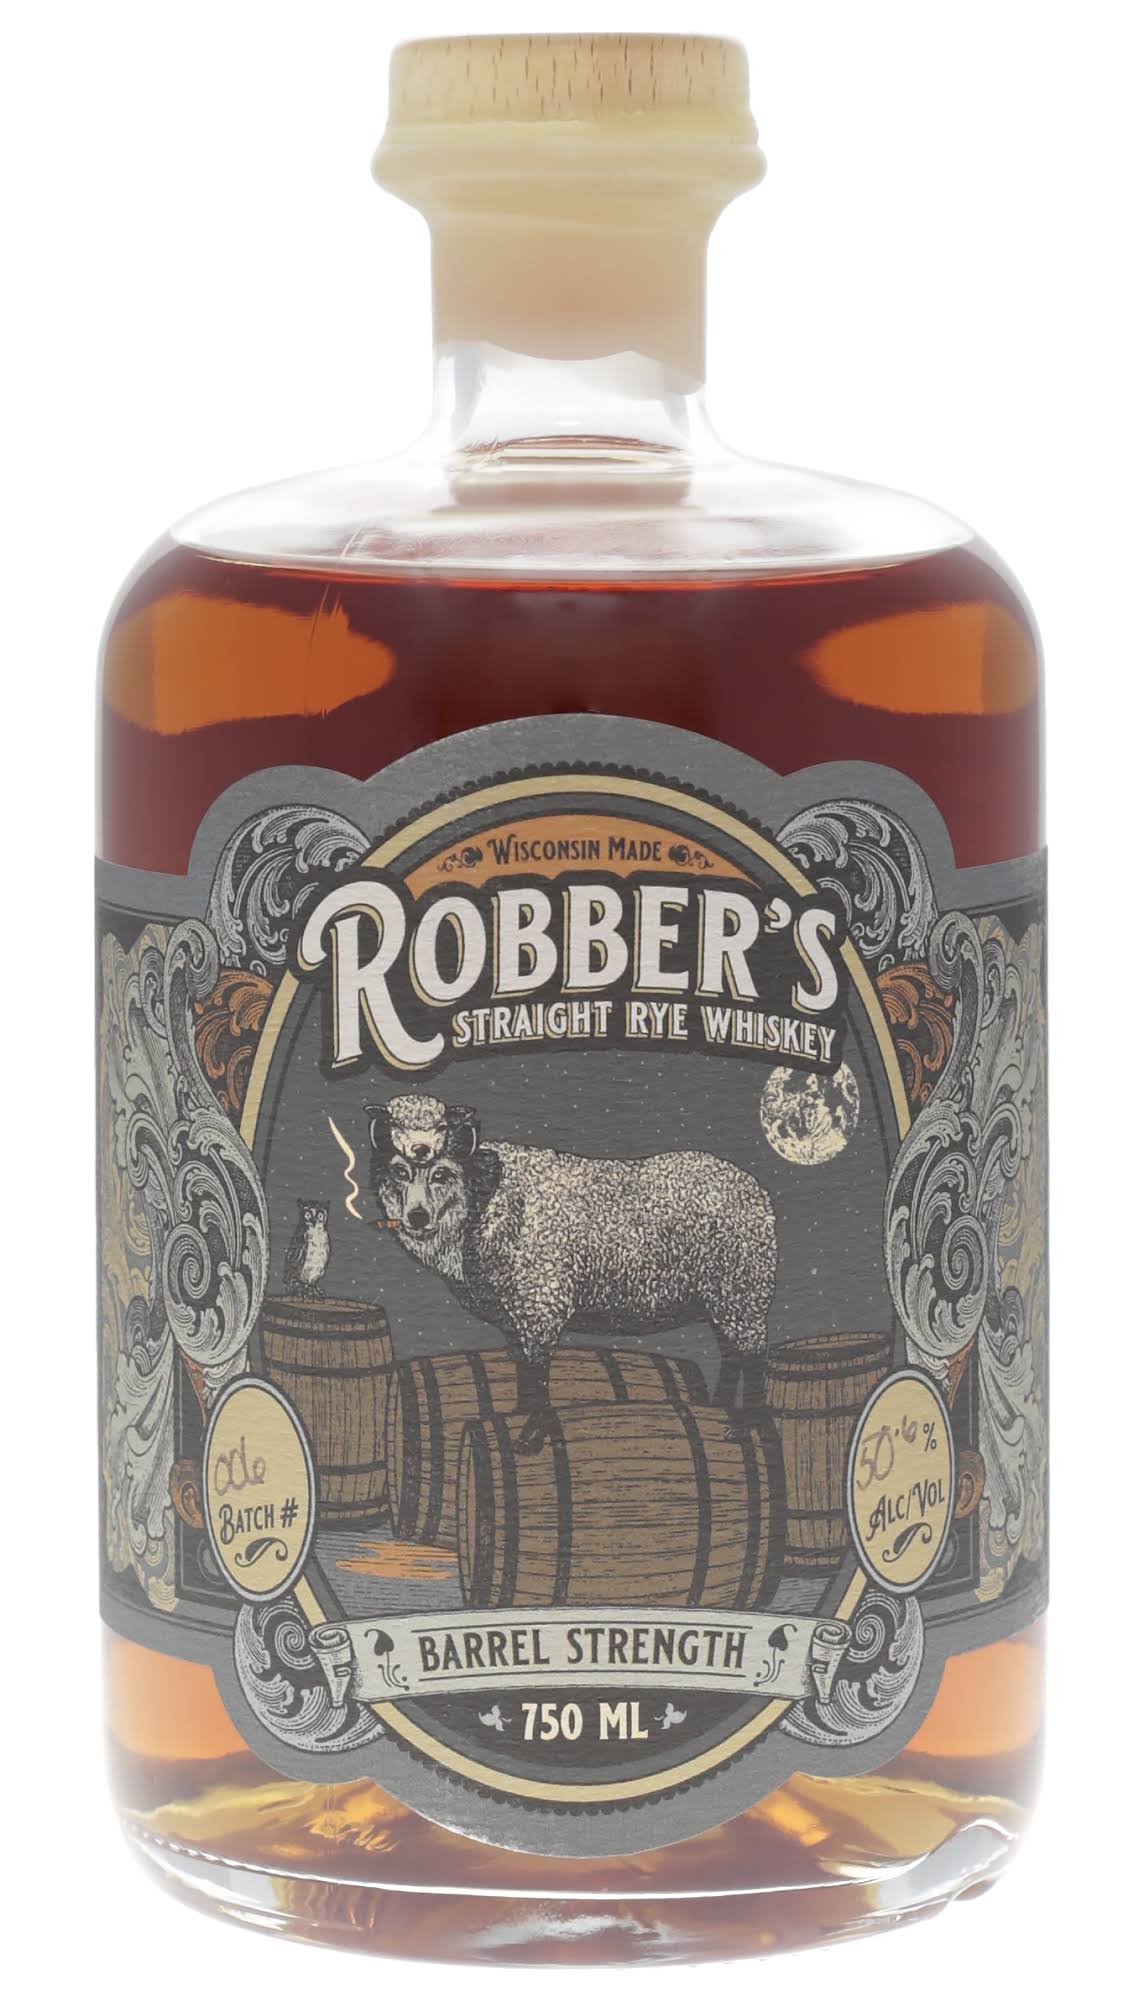 La Crosse Distilling Co. Robber's Straight Rye Whiskey - 750 ml